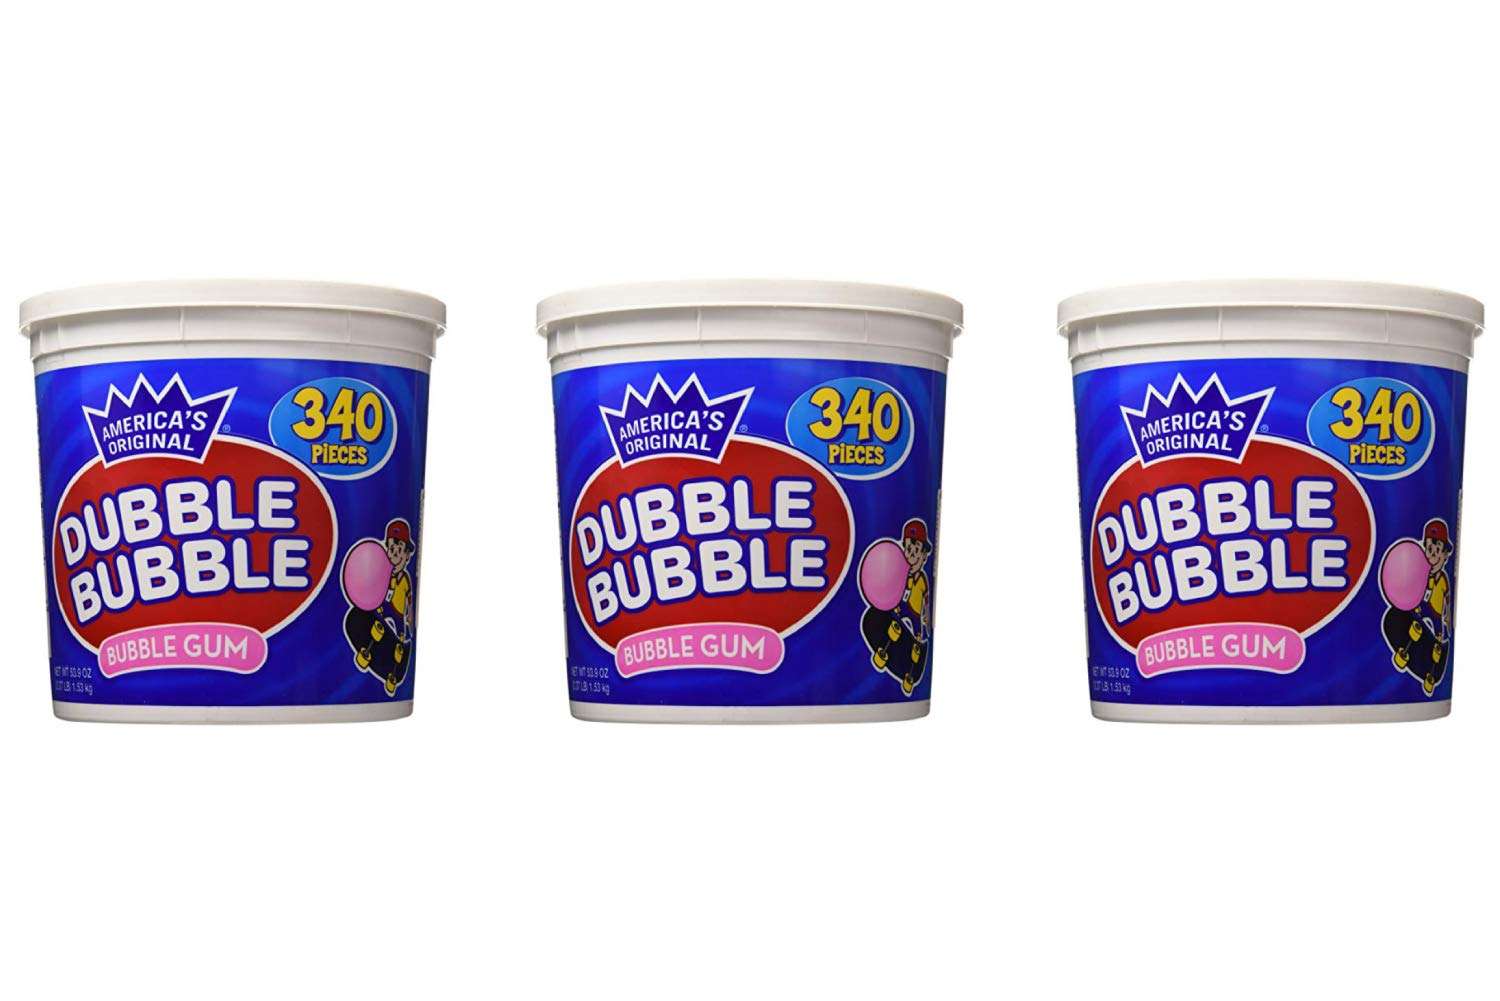 Bucket of Bubble Gum